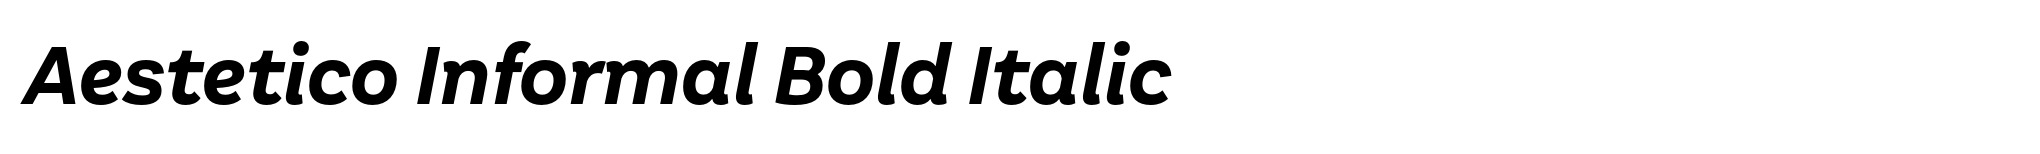 Aestetico Informal Bold Italic image